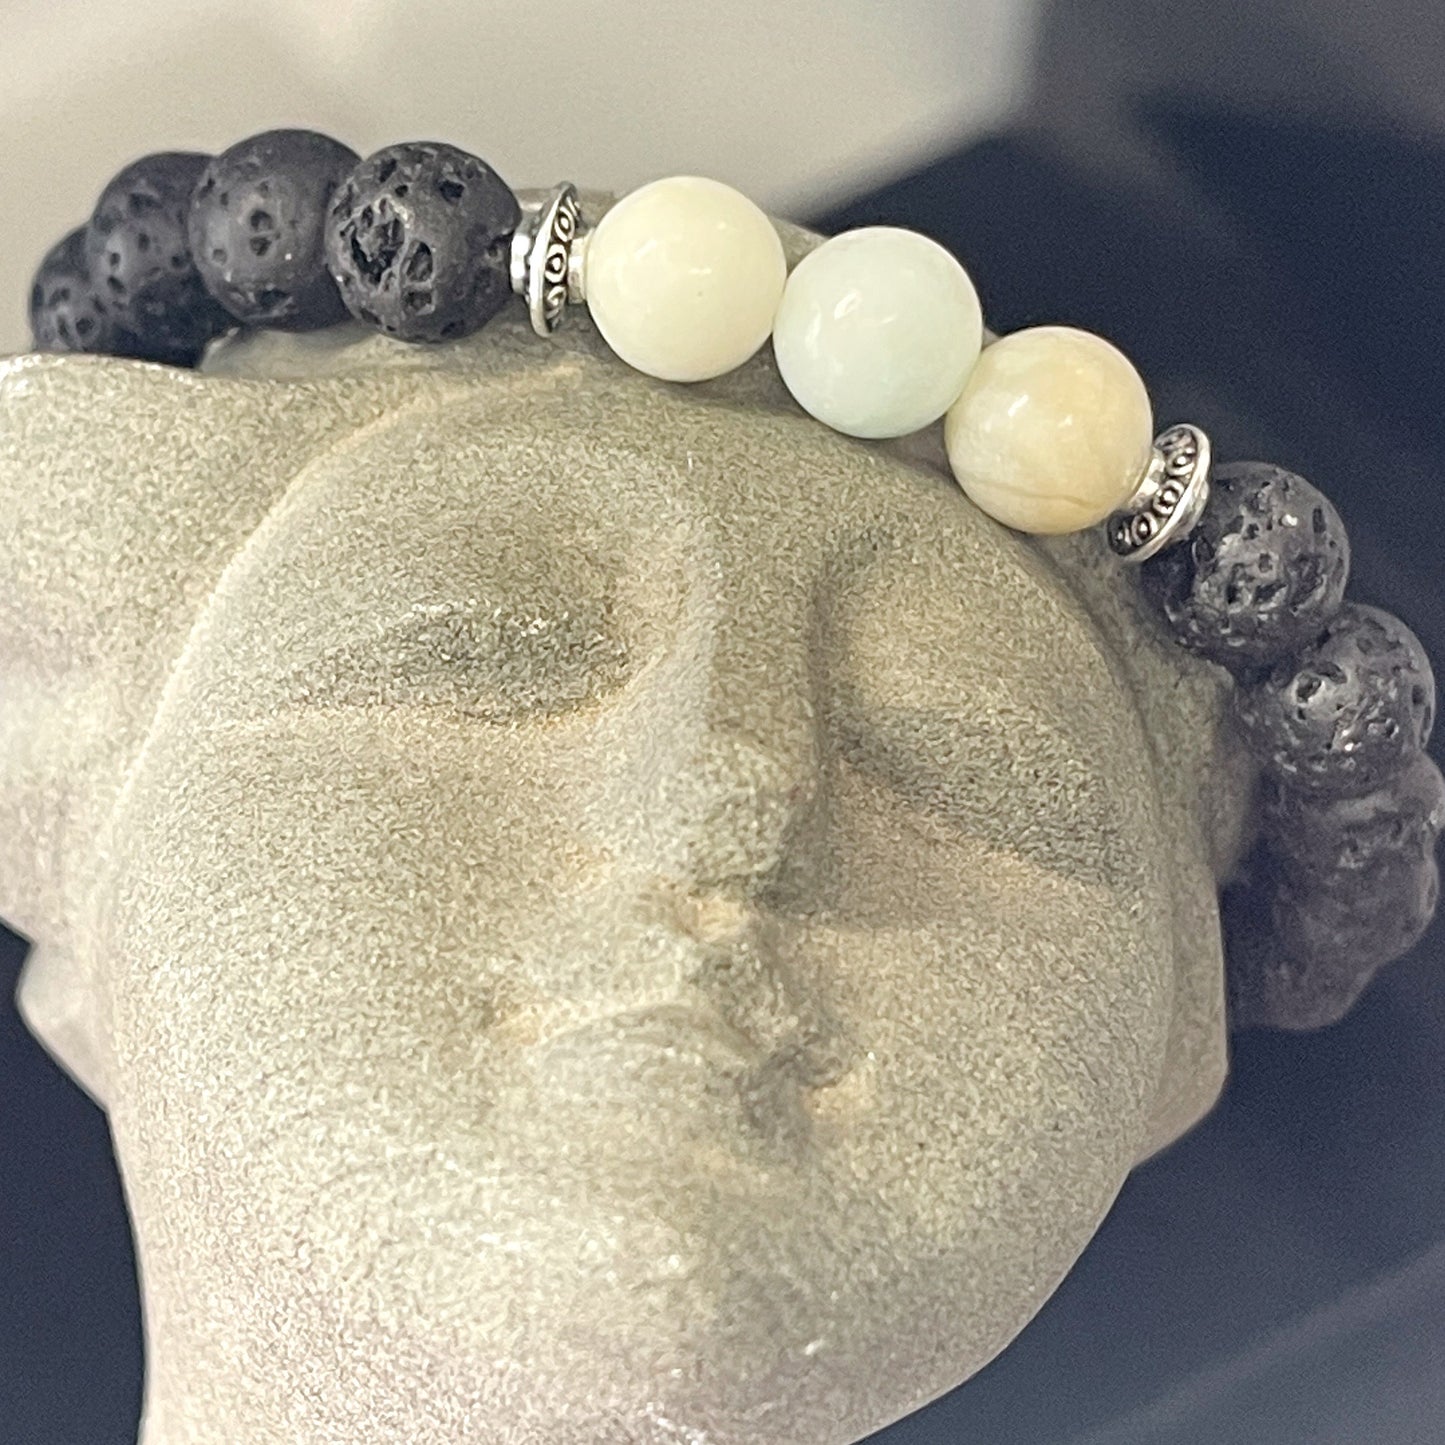 Amazonite Lava Stone Bracelet can be used for calming, awakening the inner goddess, aromatherapy